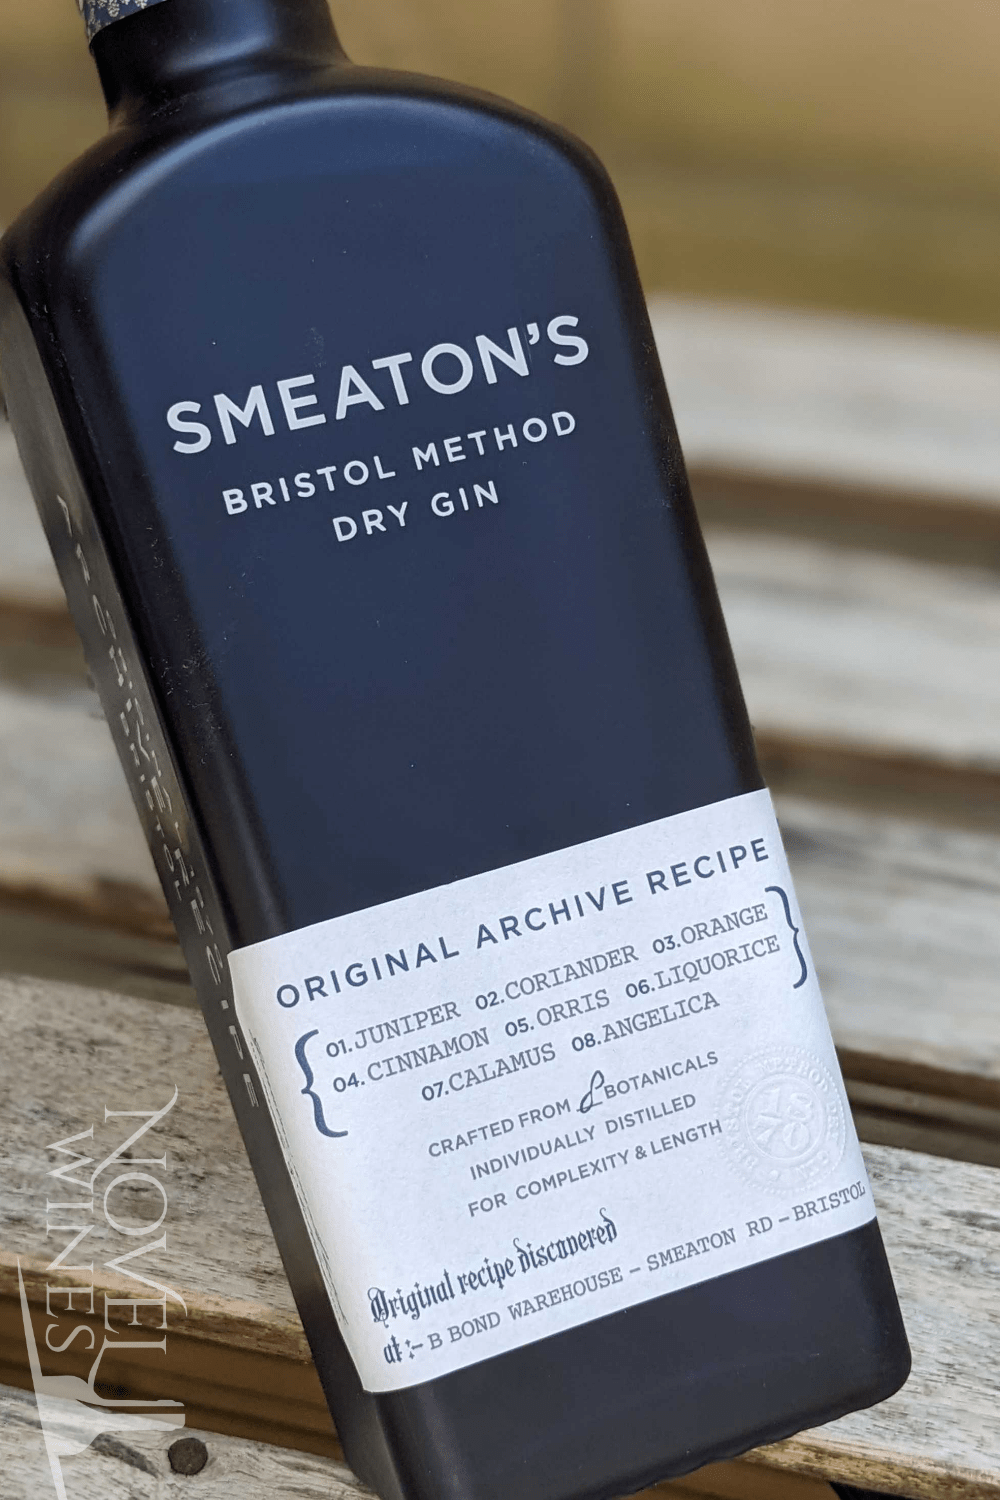 Smeaton's Gin Smeaton's Bristol Method Dry Gin 45.0% abv, England